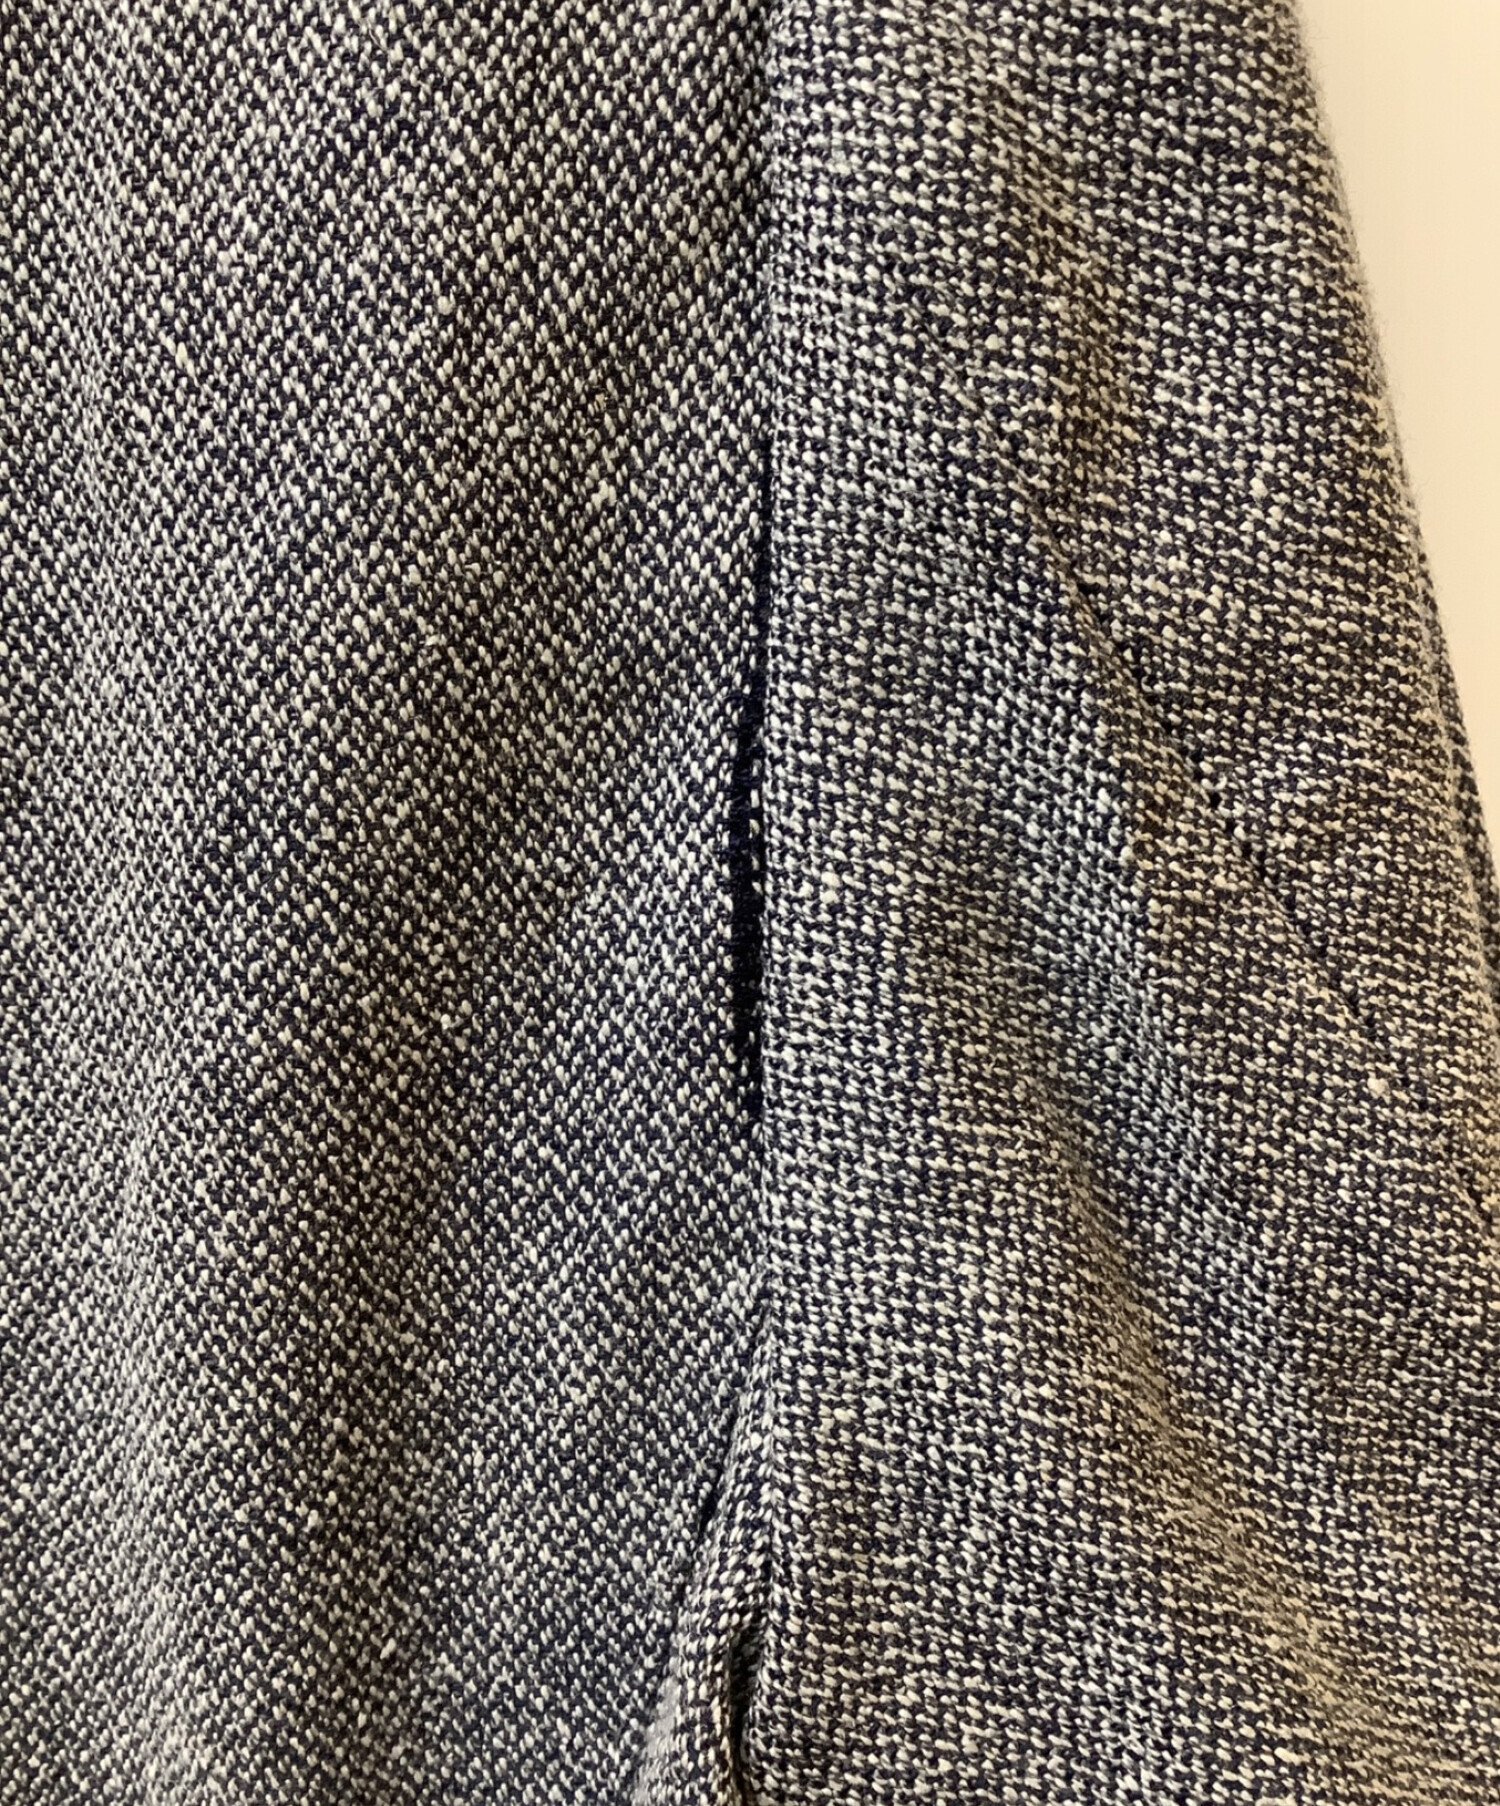 LARDINIラルディーニ　テーラードジャケット  新品未使用　44三越日本橋本店素材